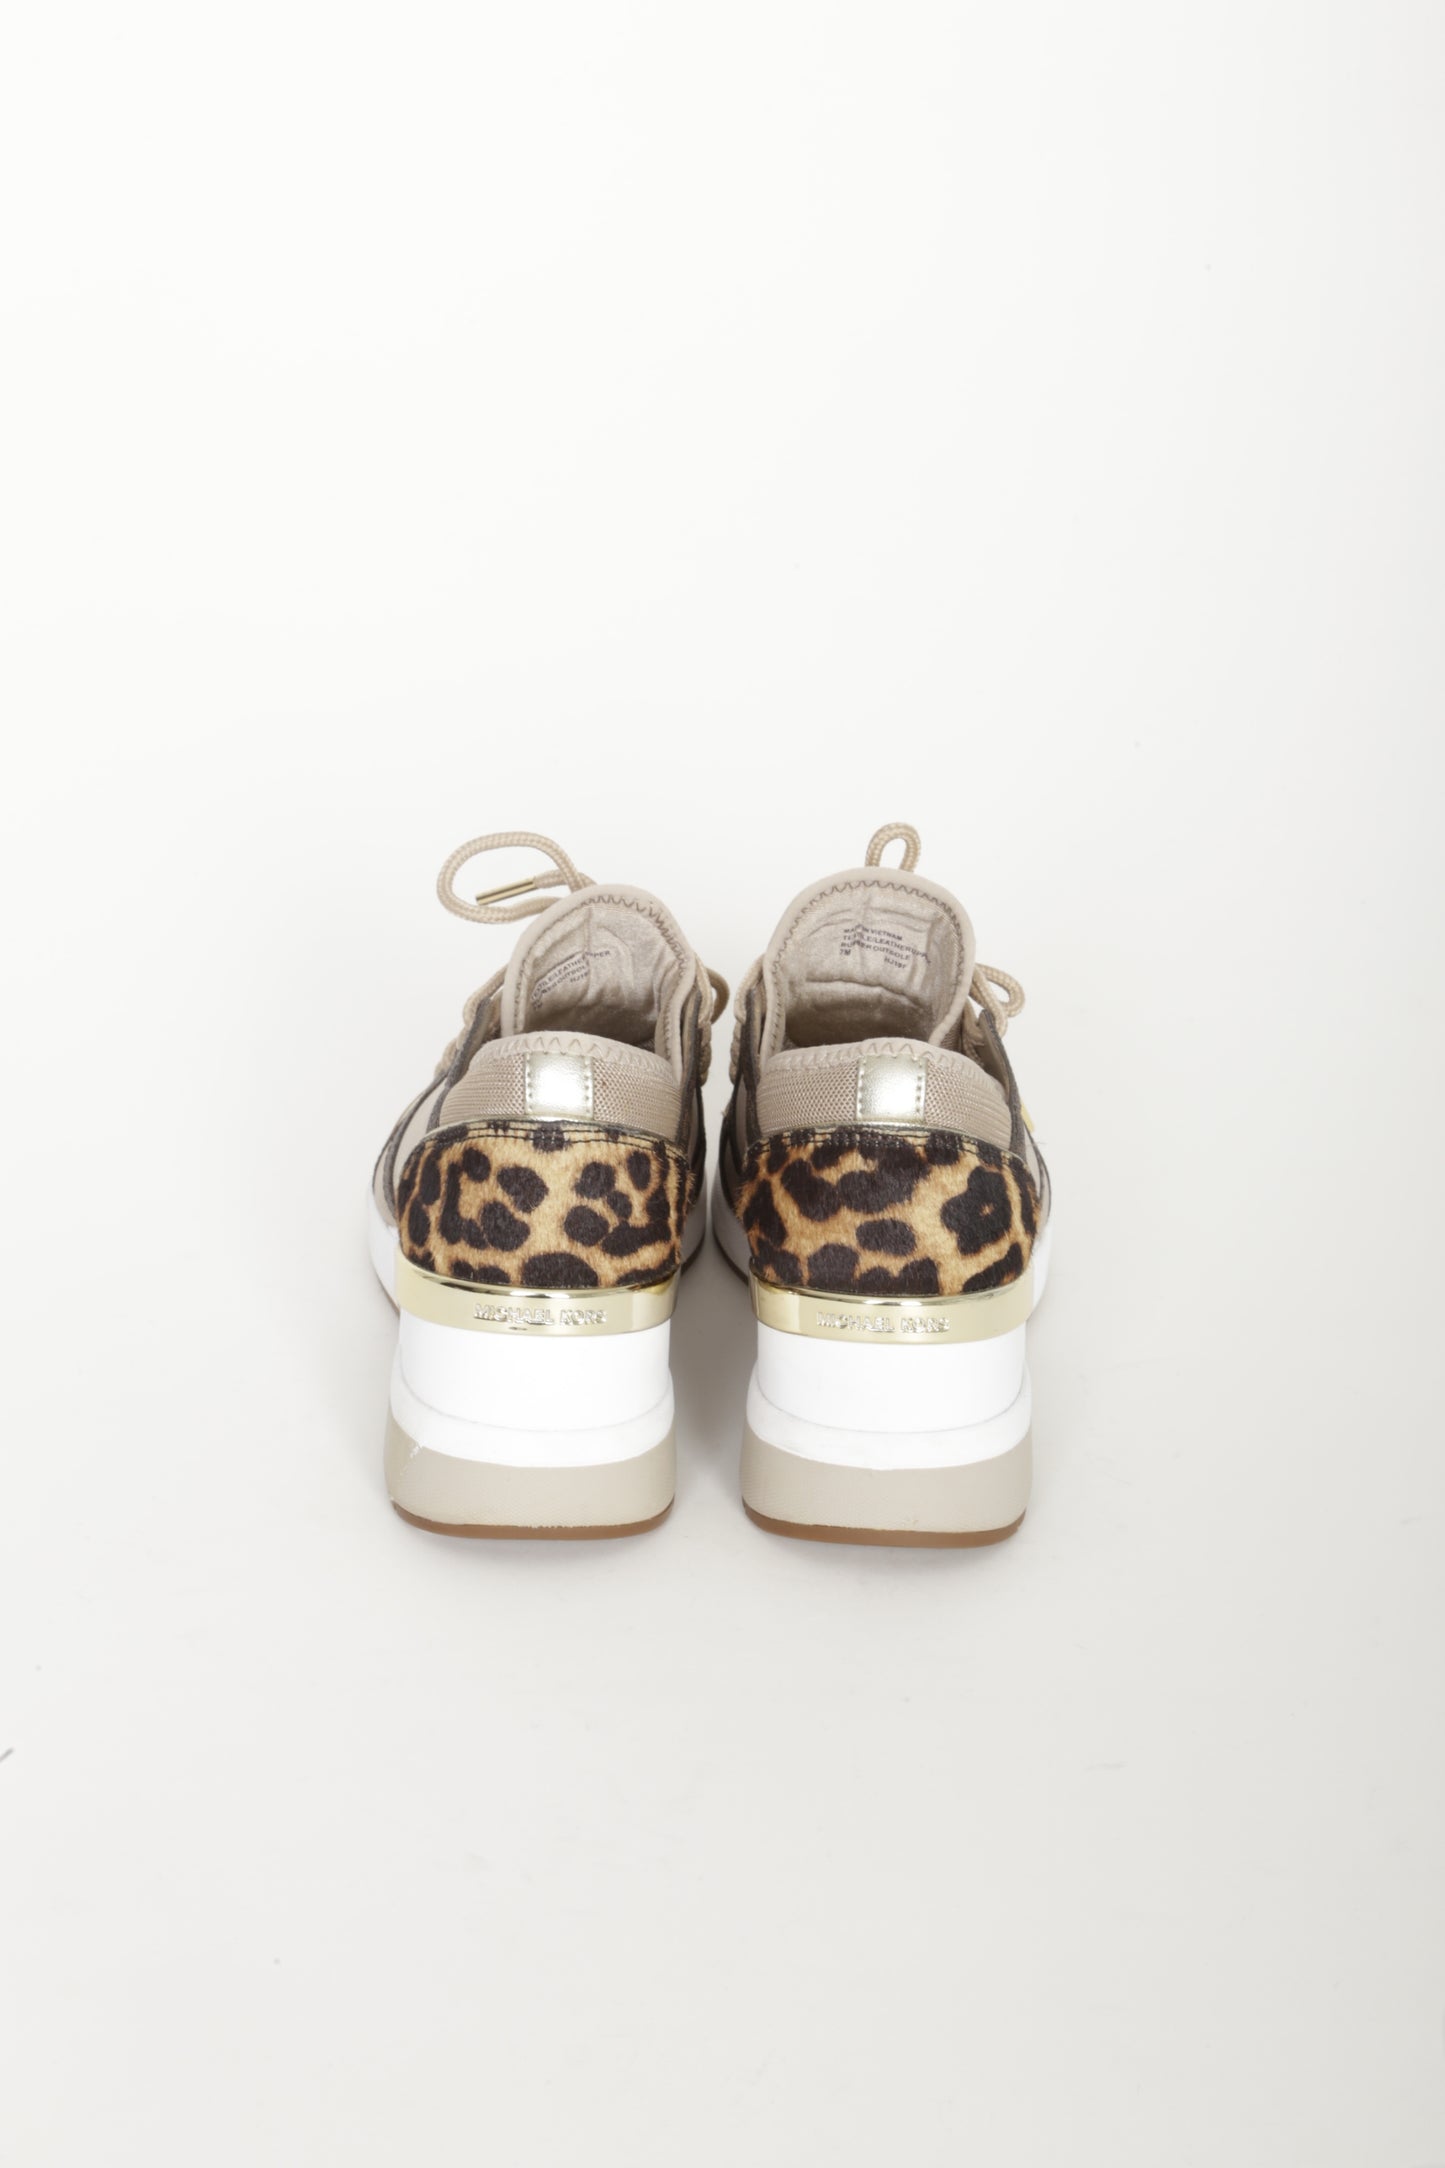 Michael Kors Womens Brown Sneakers Size 7